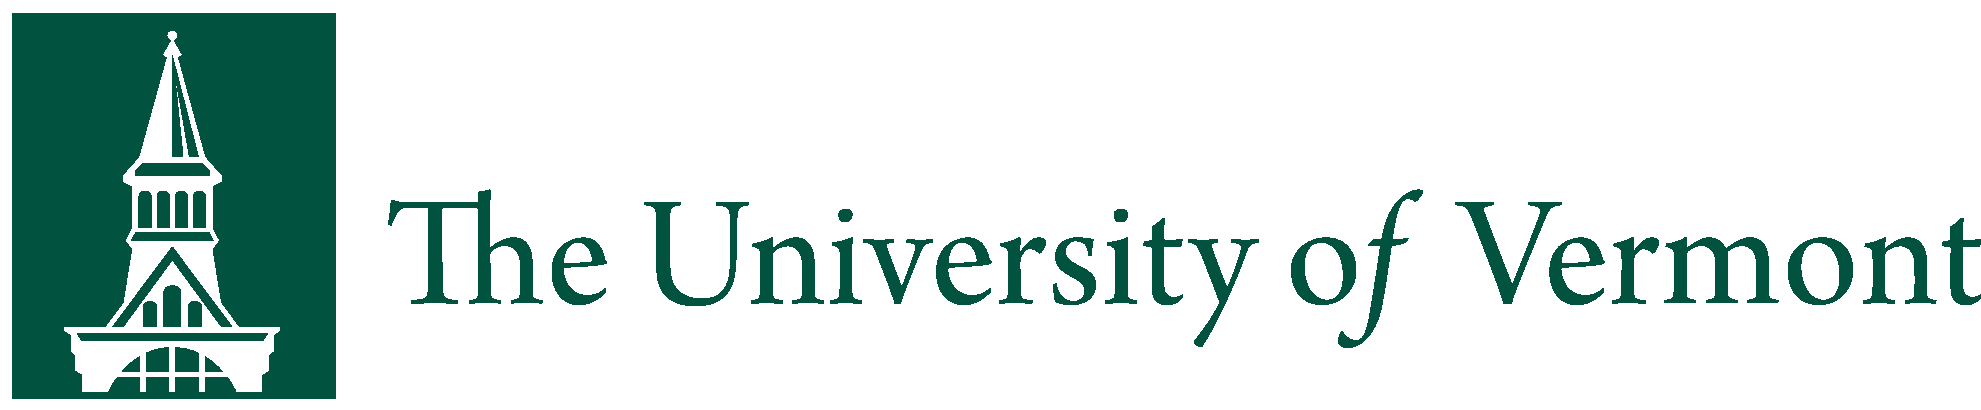 University-of-Vermont-Logo.png